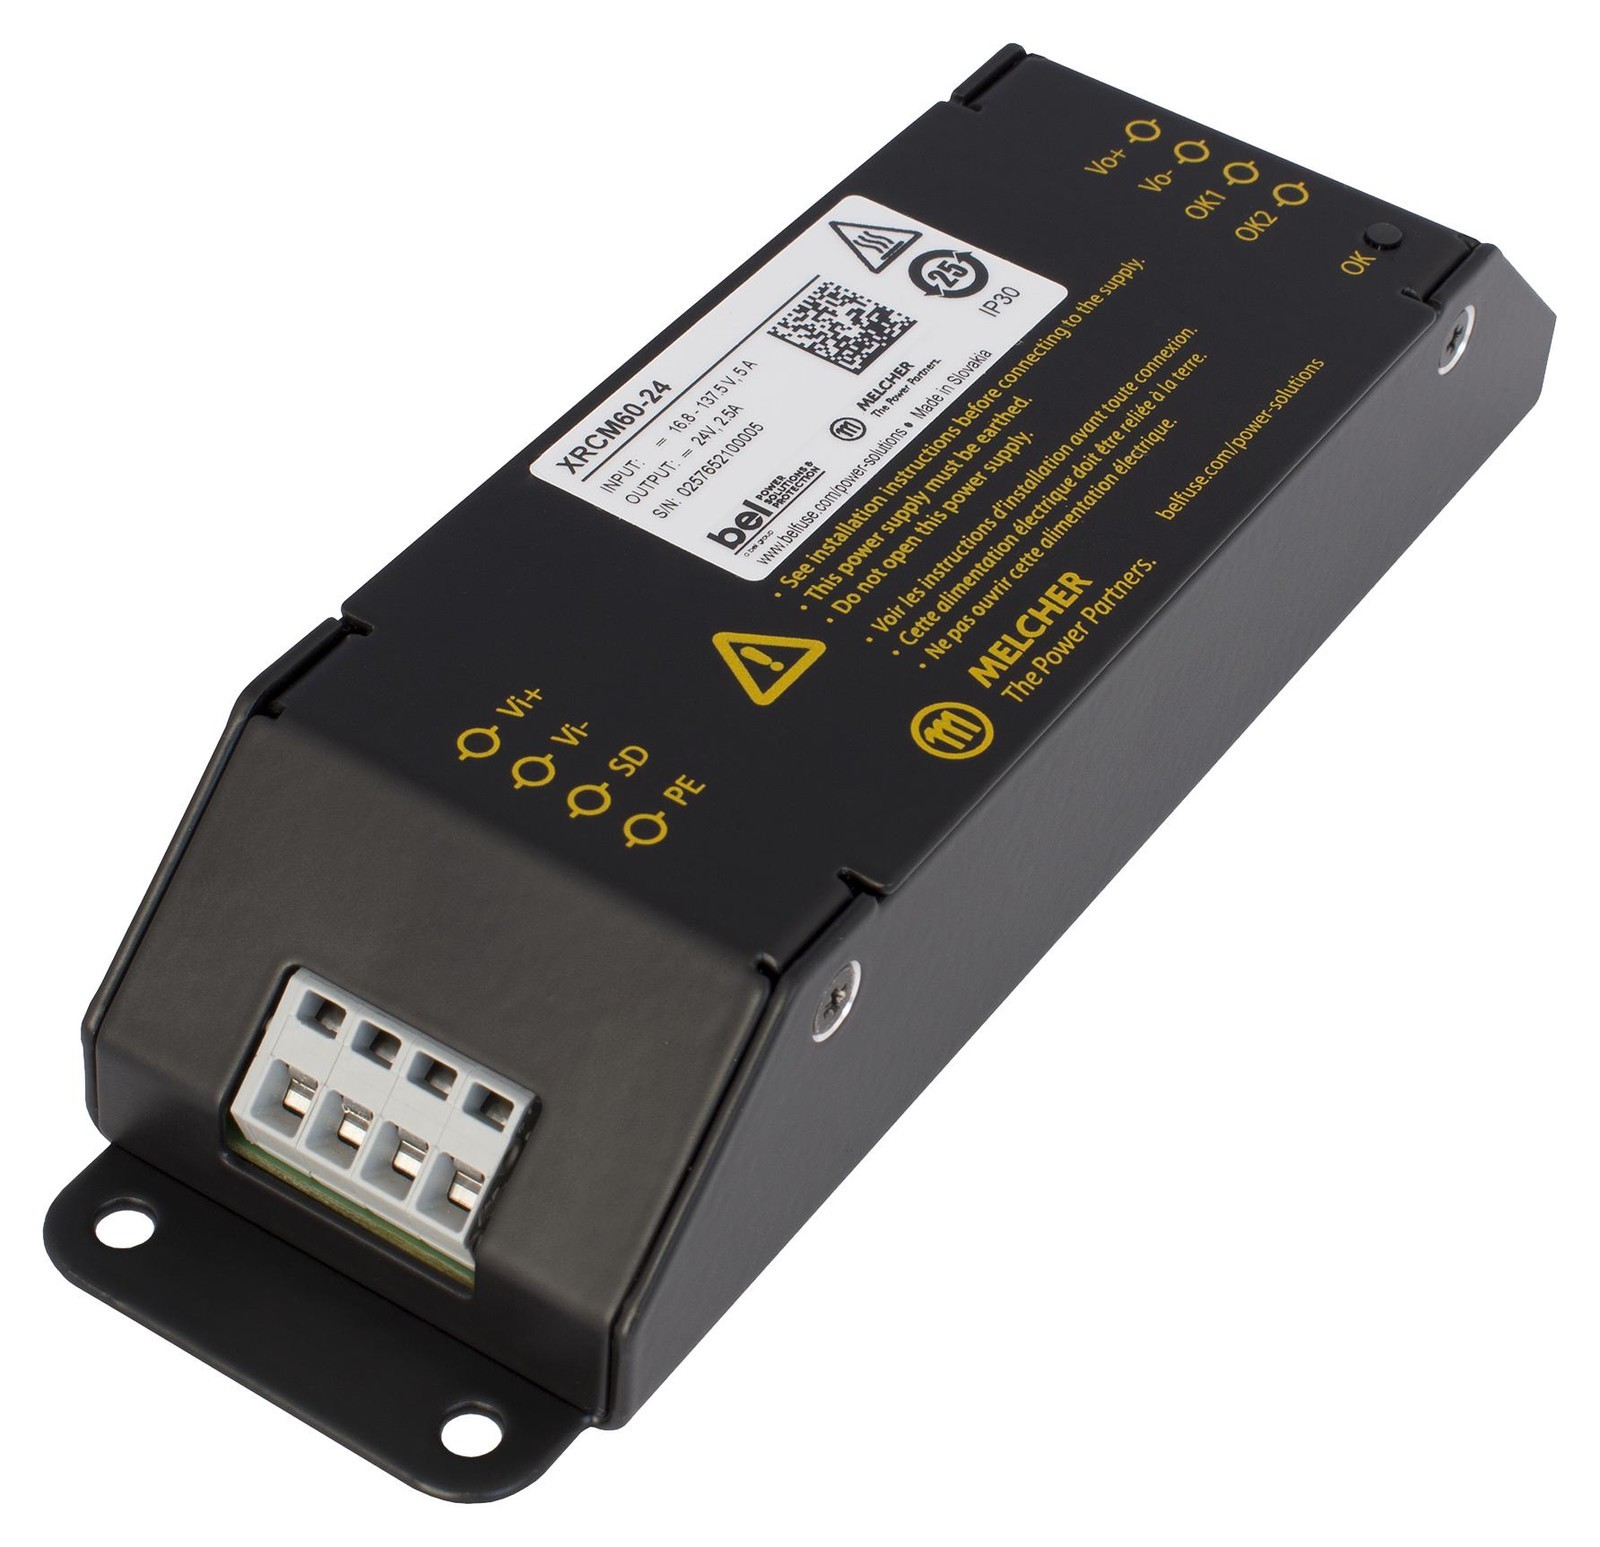 Bel Power Solutions Xrcm60-12 Dc-Dc Converter, 12V, 5A